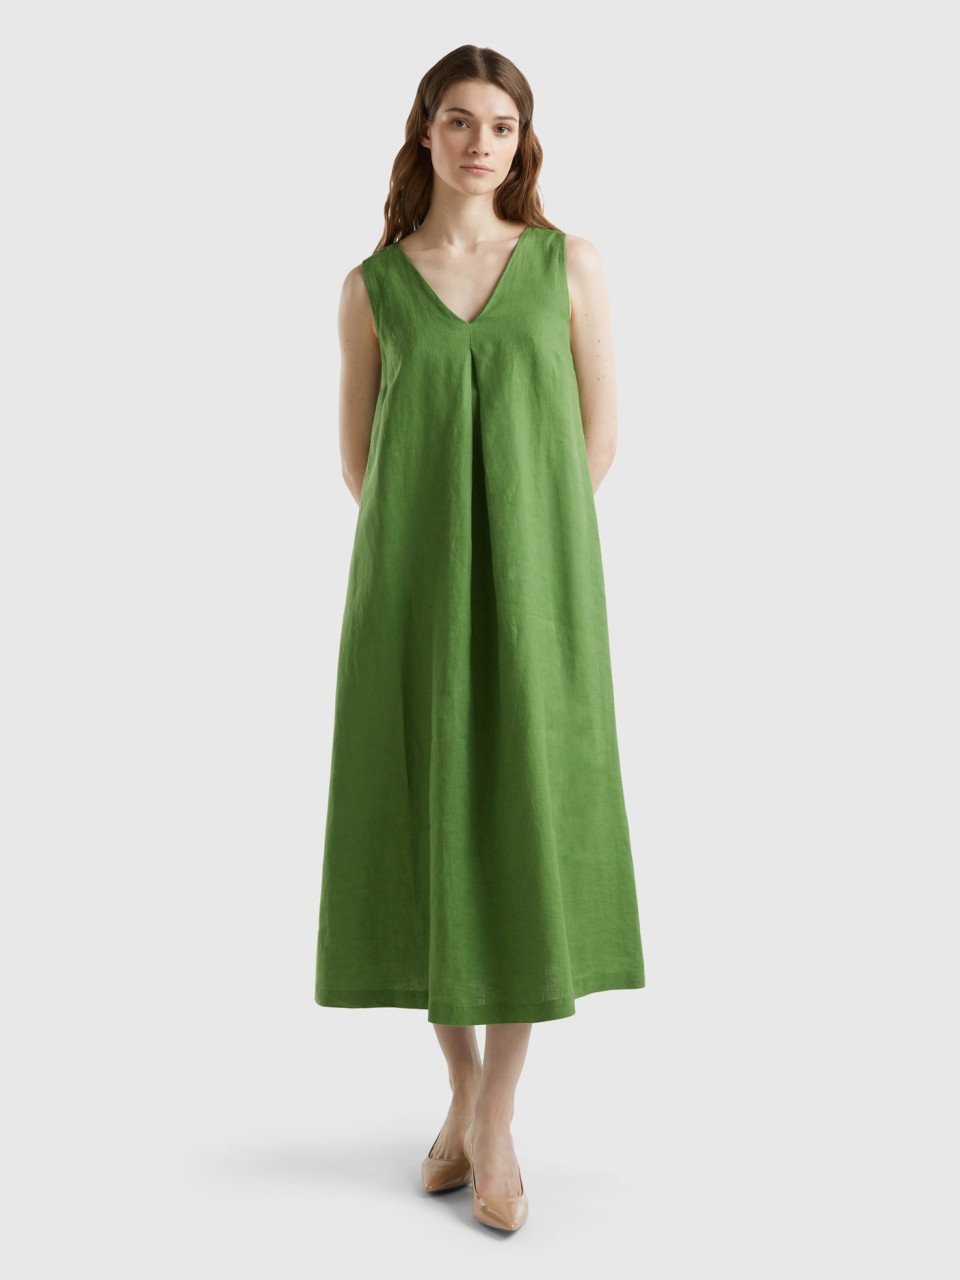 Benetton, Sleeveless Dress In Pure Linen, Military Green, Women